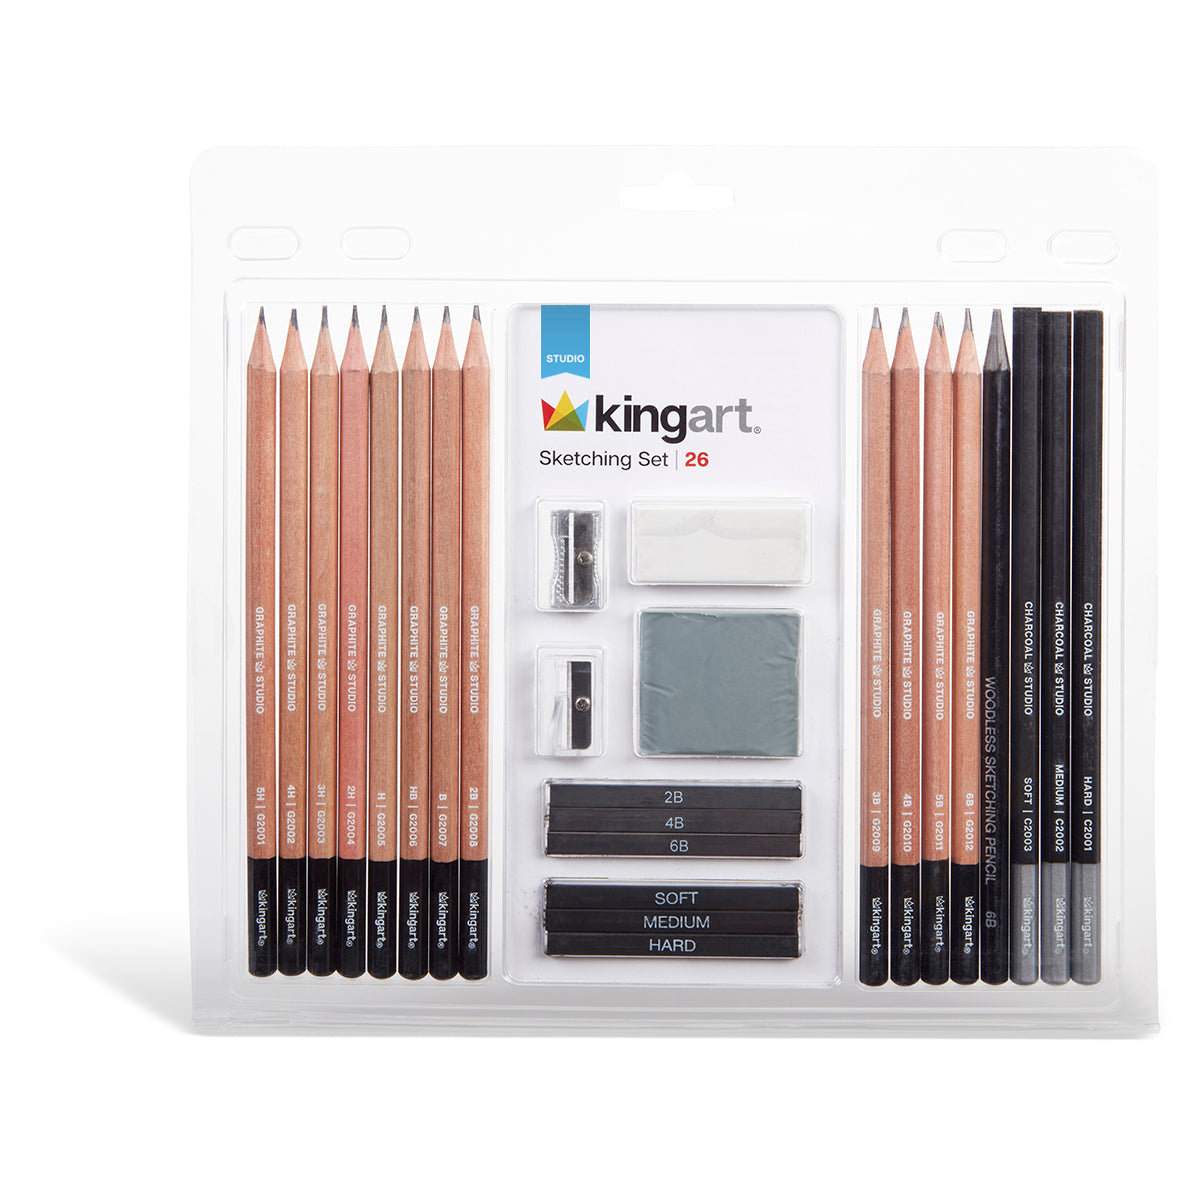 KINGART Sketch Combo Pack with 11x14 Sketchbook & 30 Piece Pencil